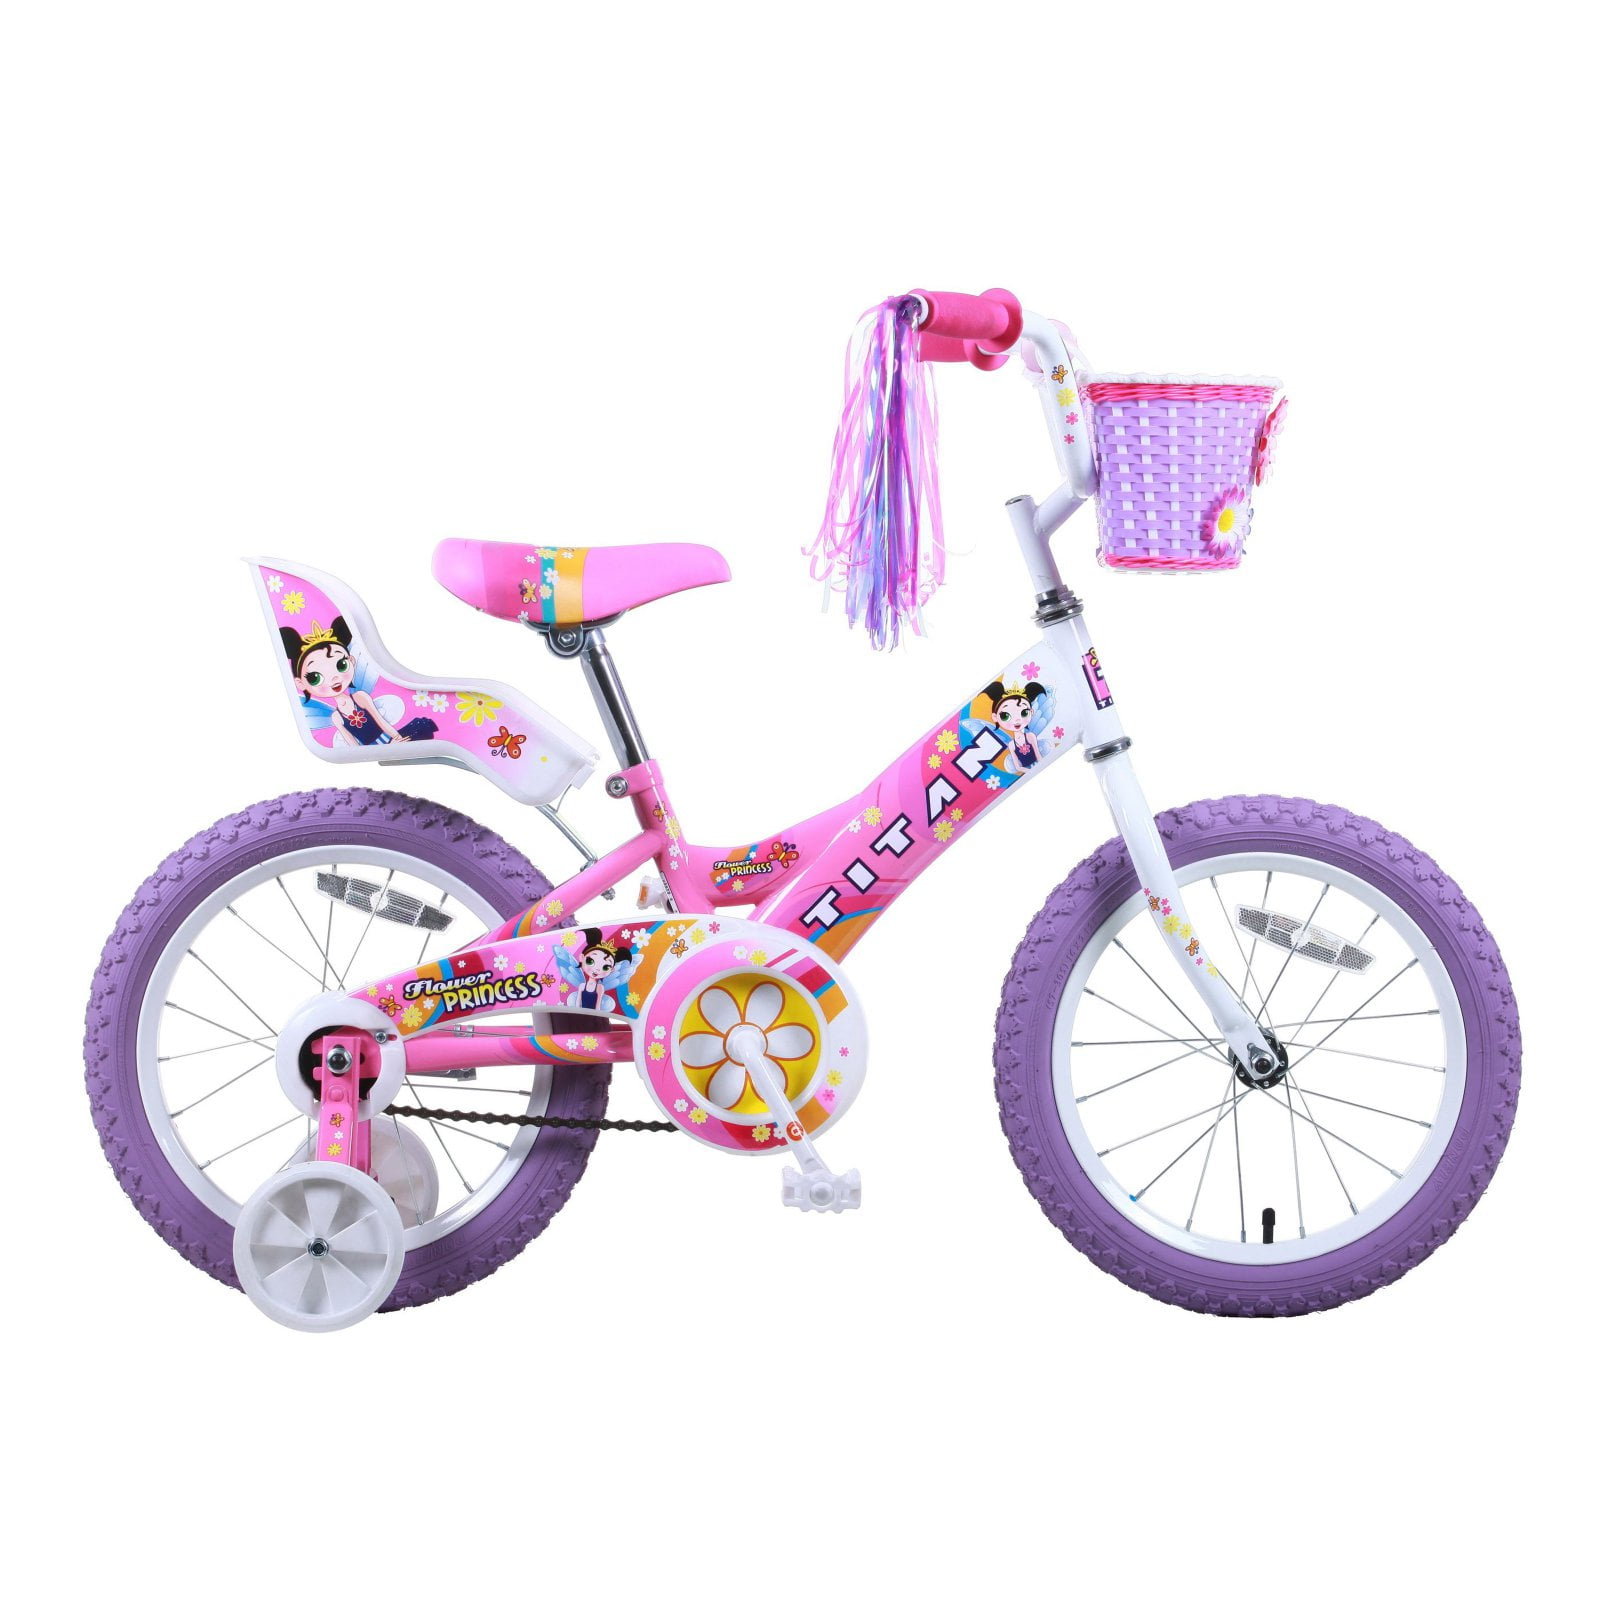 16-Inch with training wheels Pink Titan Girl's Flower Princess BMX Bike 